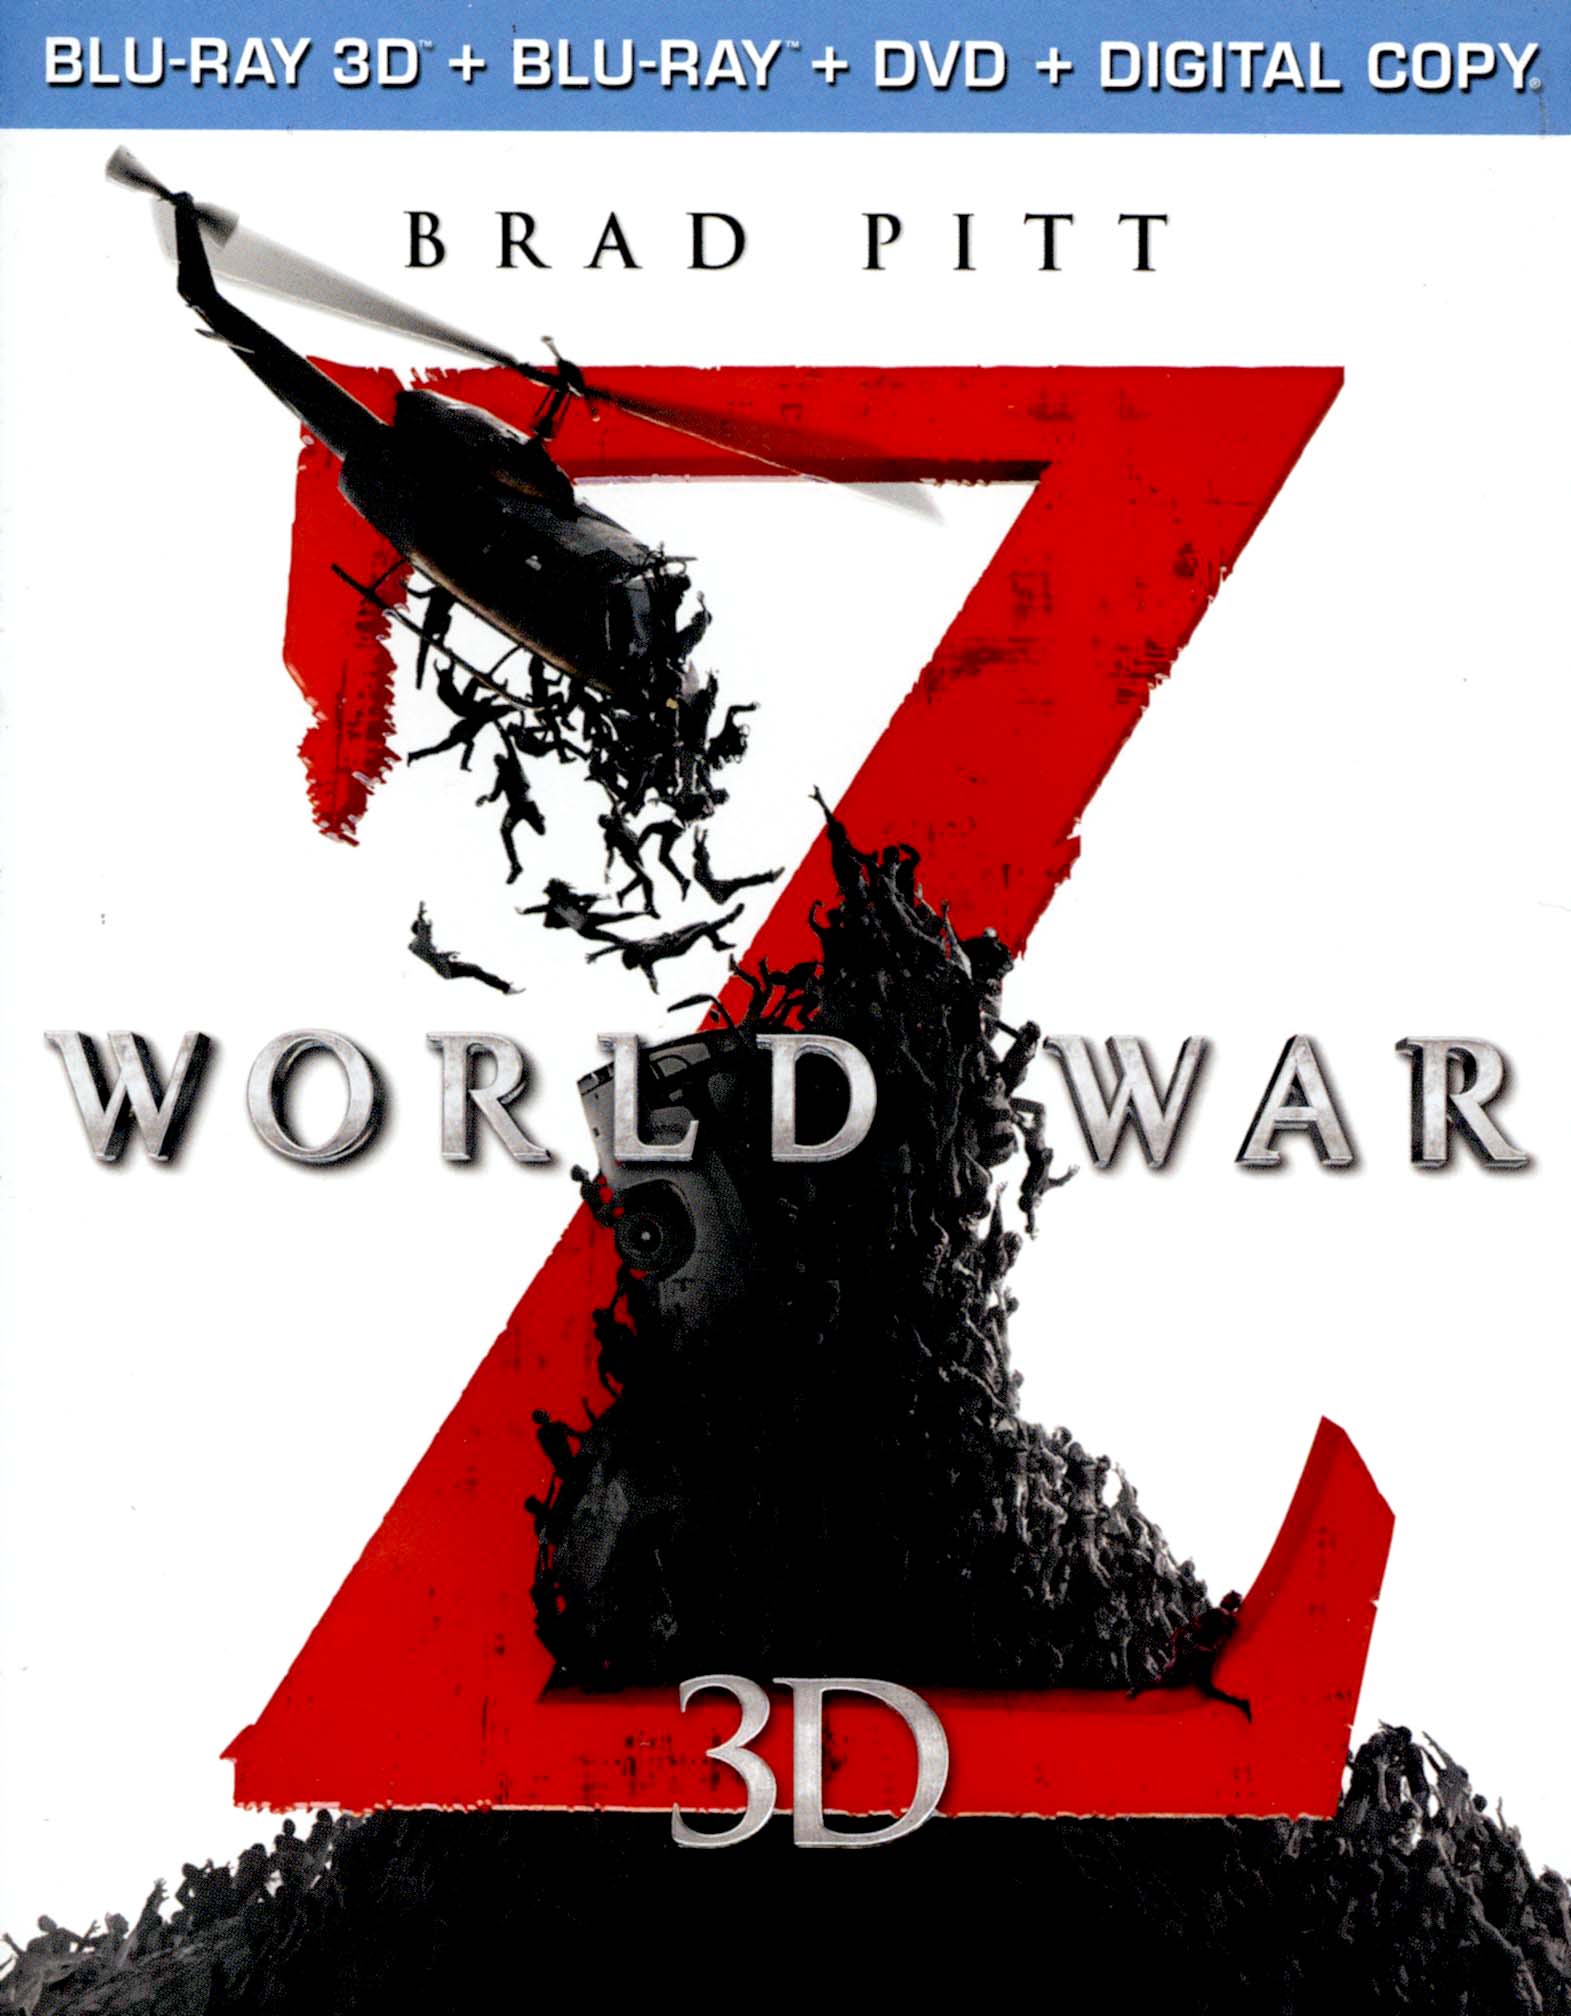 World War Z 3d Unrated 3 Discs Includes Digital Copy 3d Blu Ray Dvd Blu Ray Blu Ray 3d Dvd 13 Best Buy